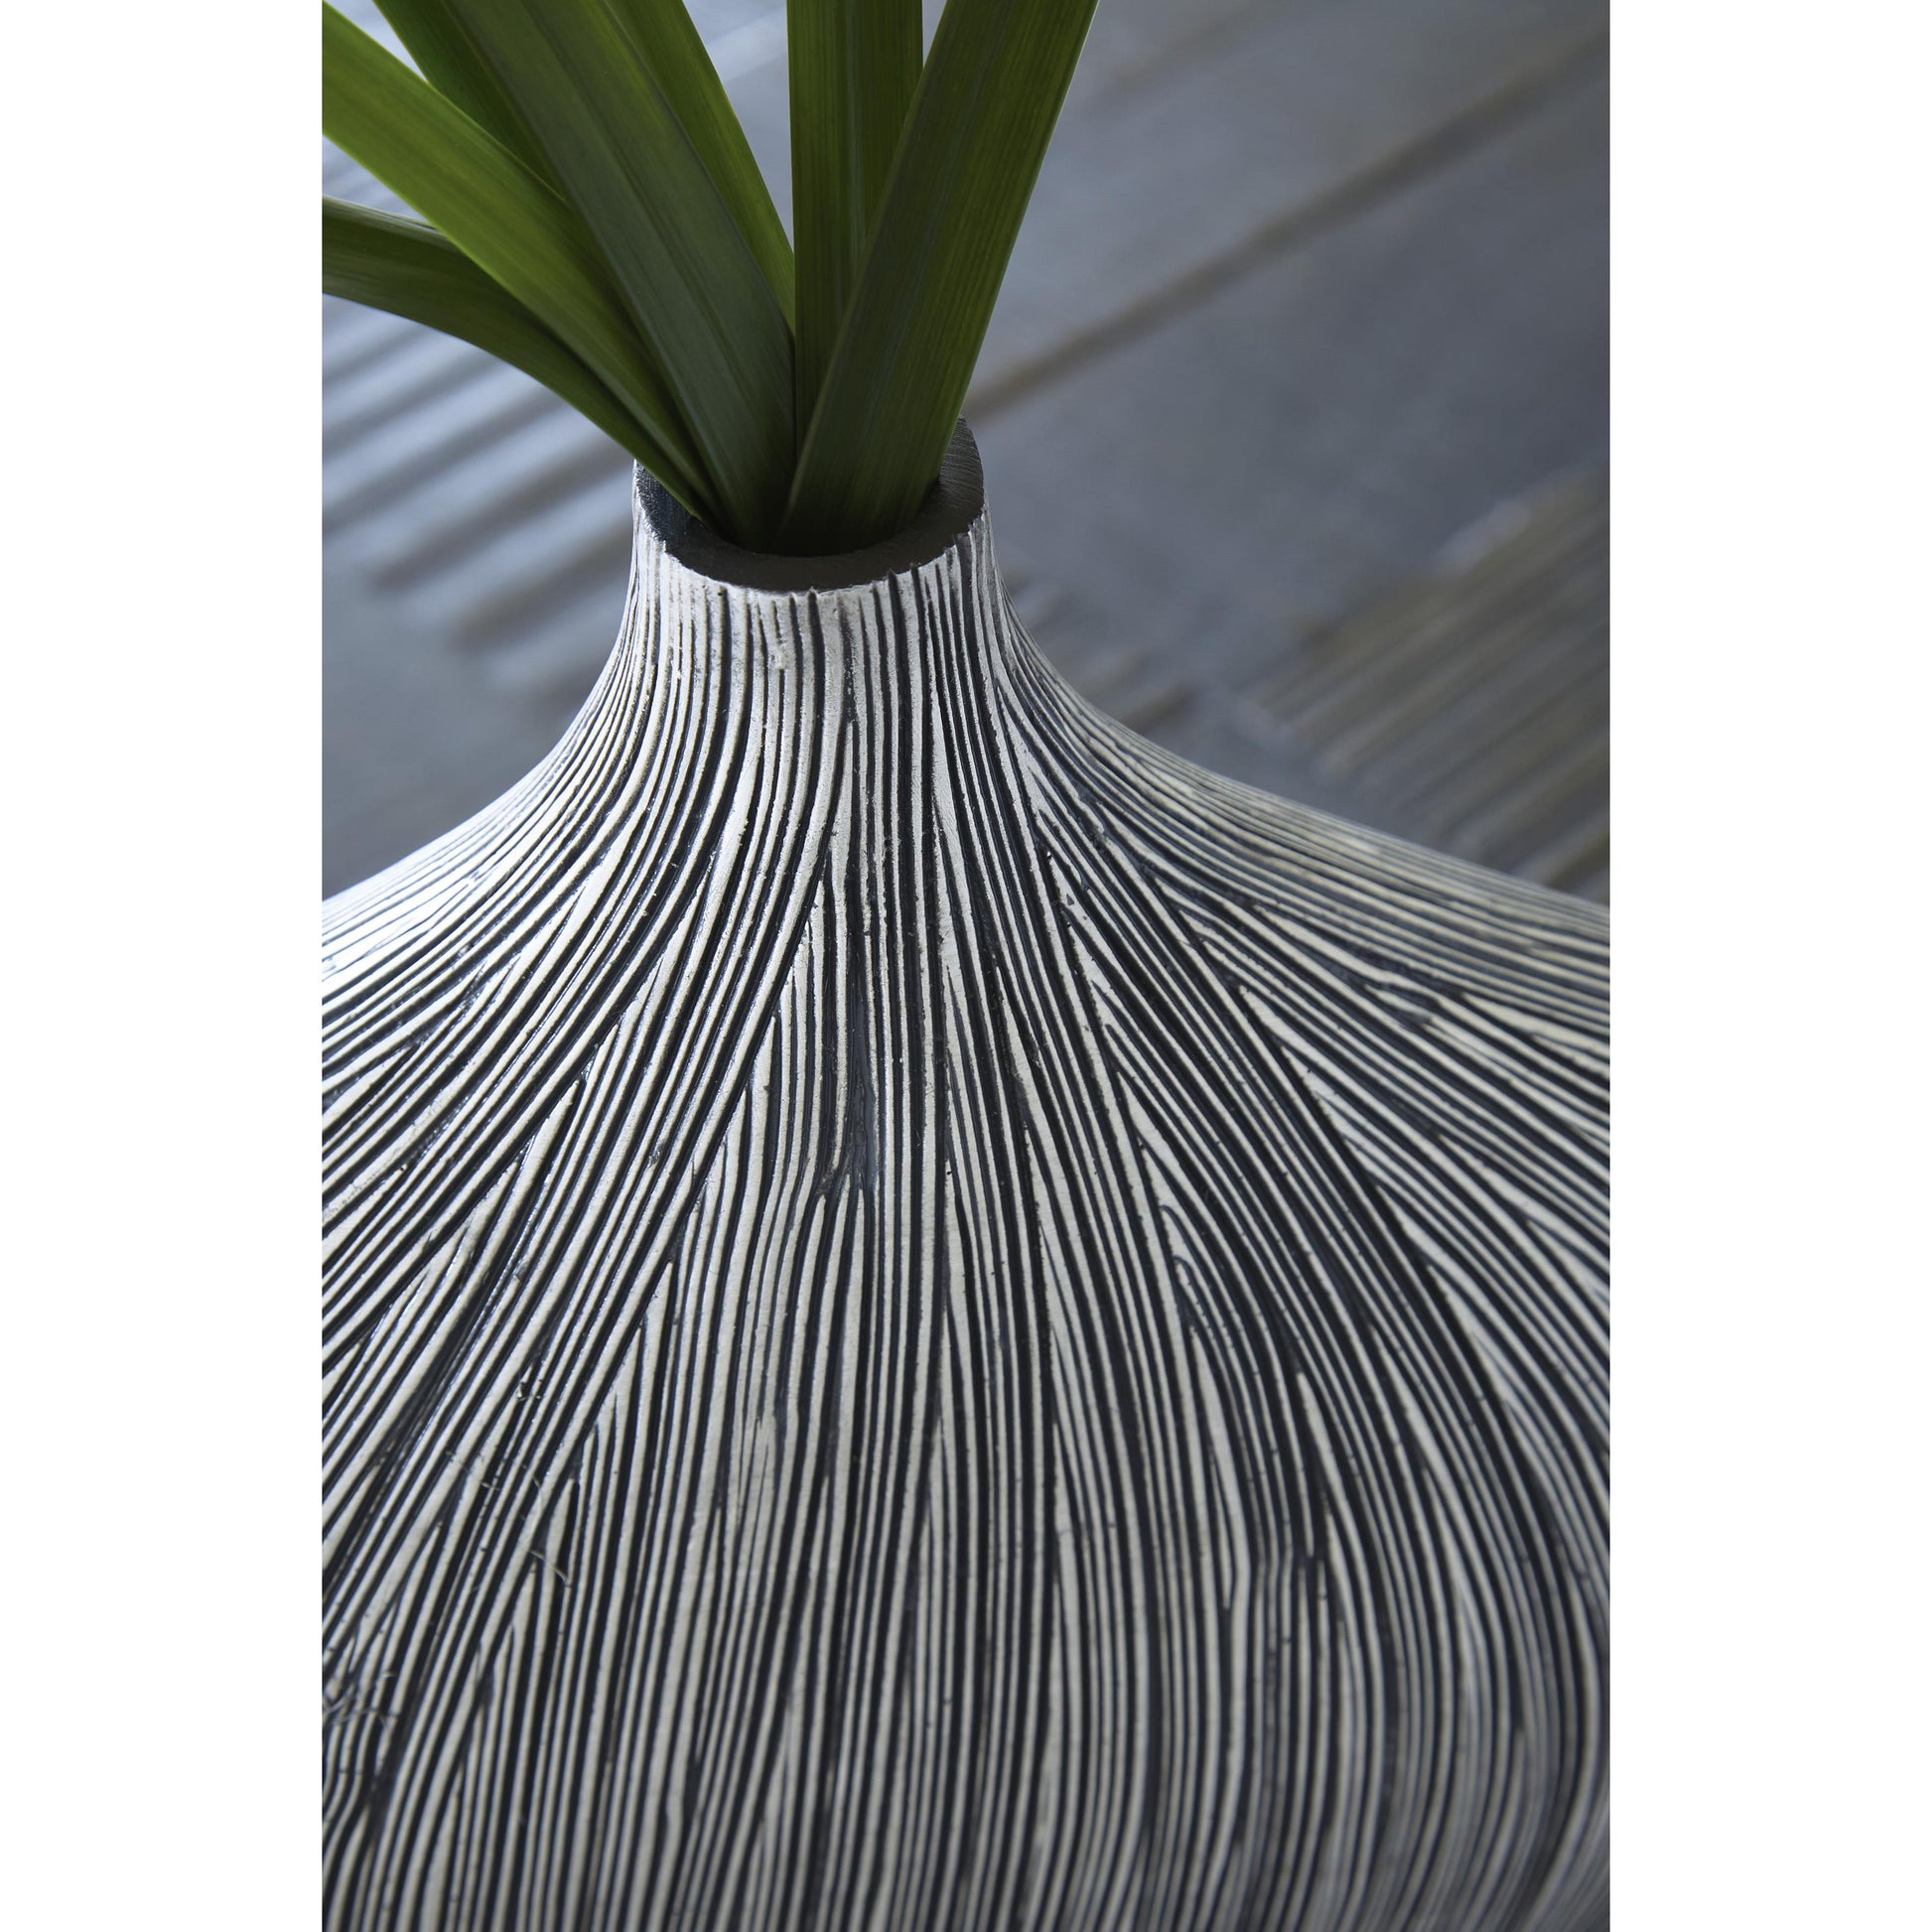 Signature Design by Ashley Home Decor Vases & Bowls A2000546 IMAGE 4